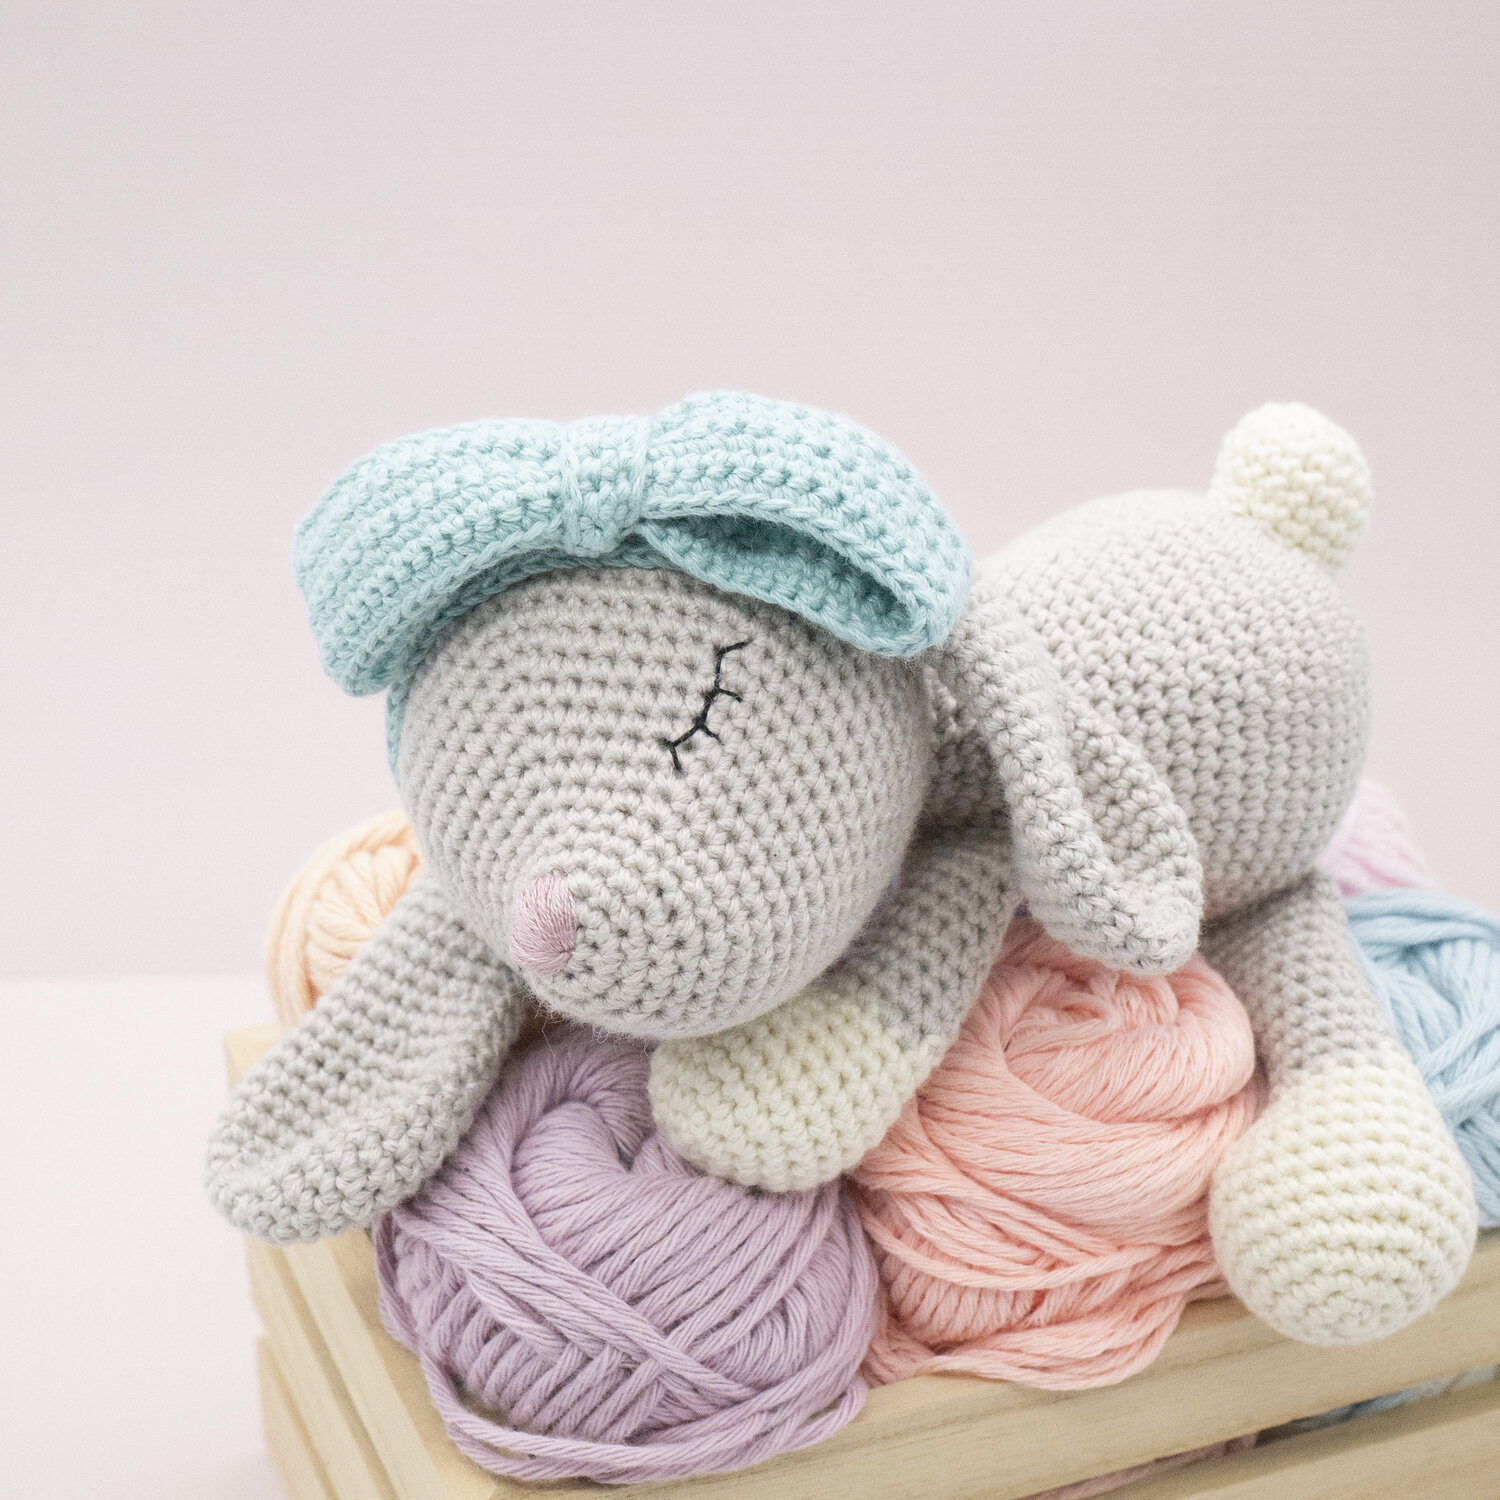 Crochet amigurumi pattern of a bunny rabbit — The Little Hook Crochet